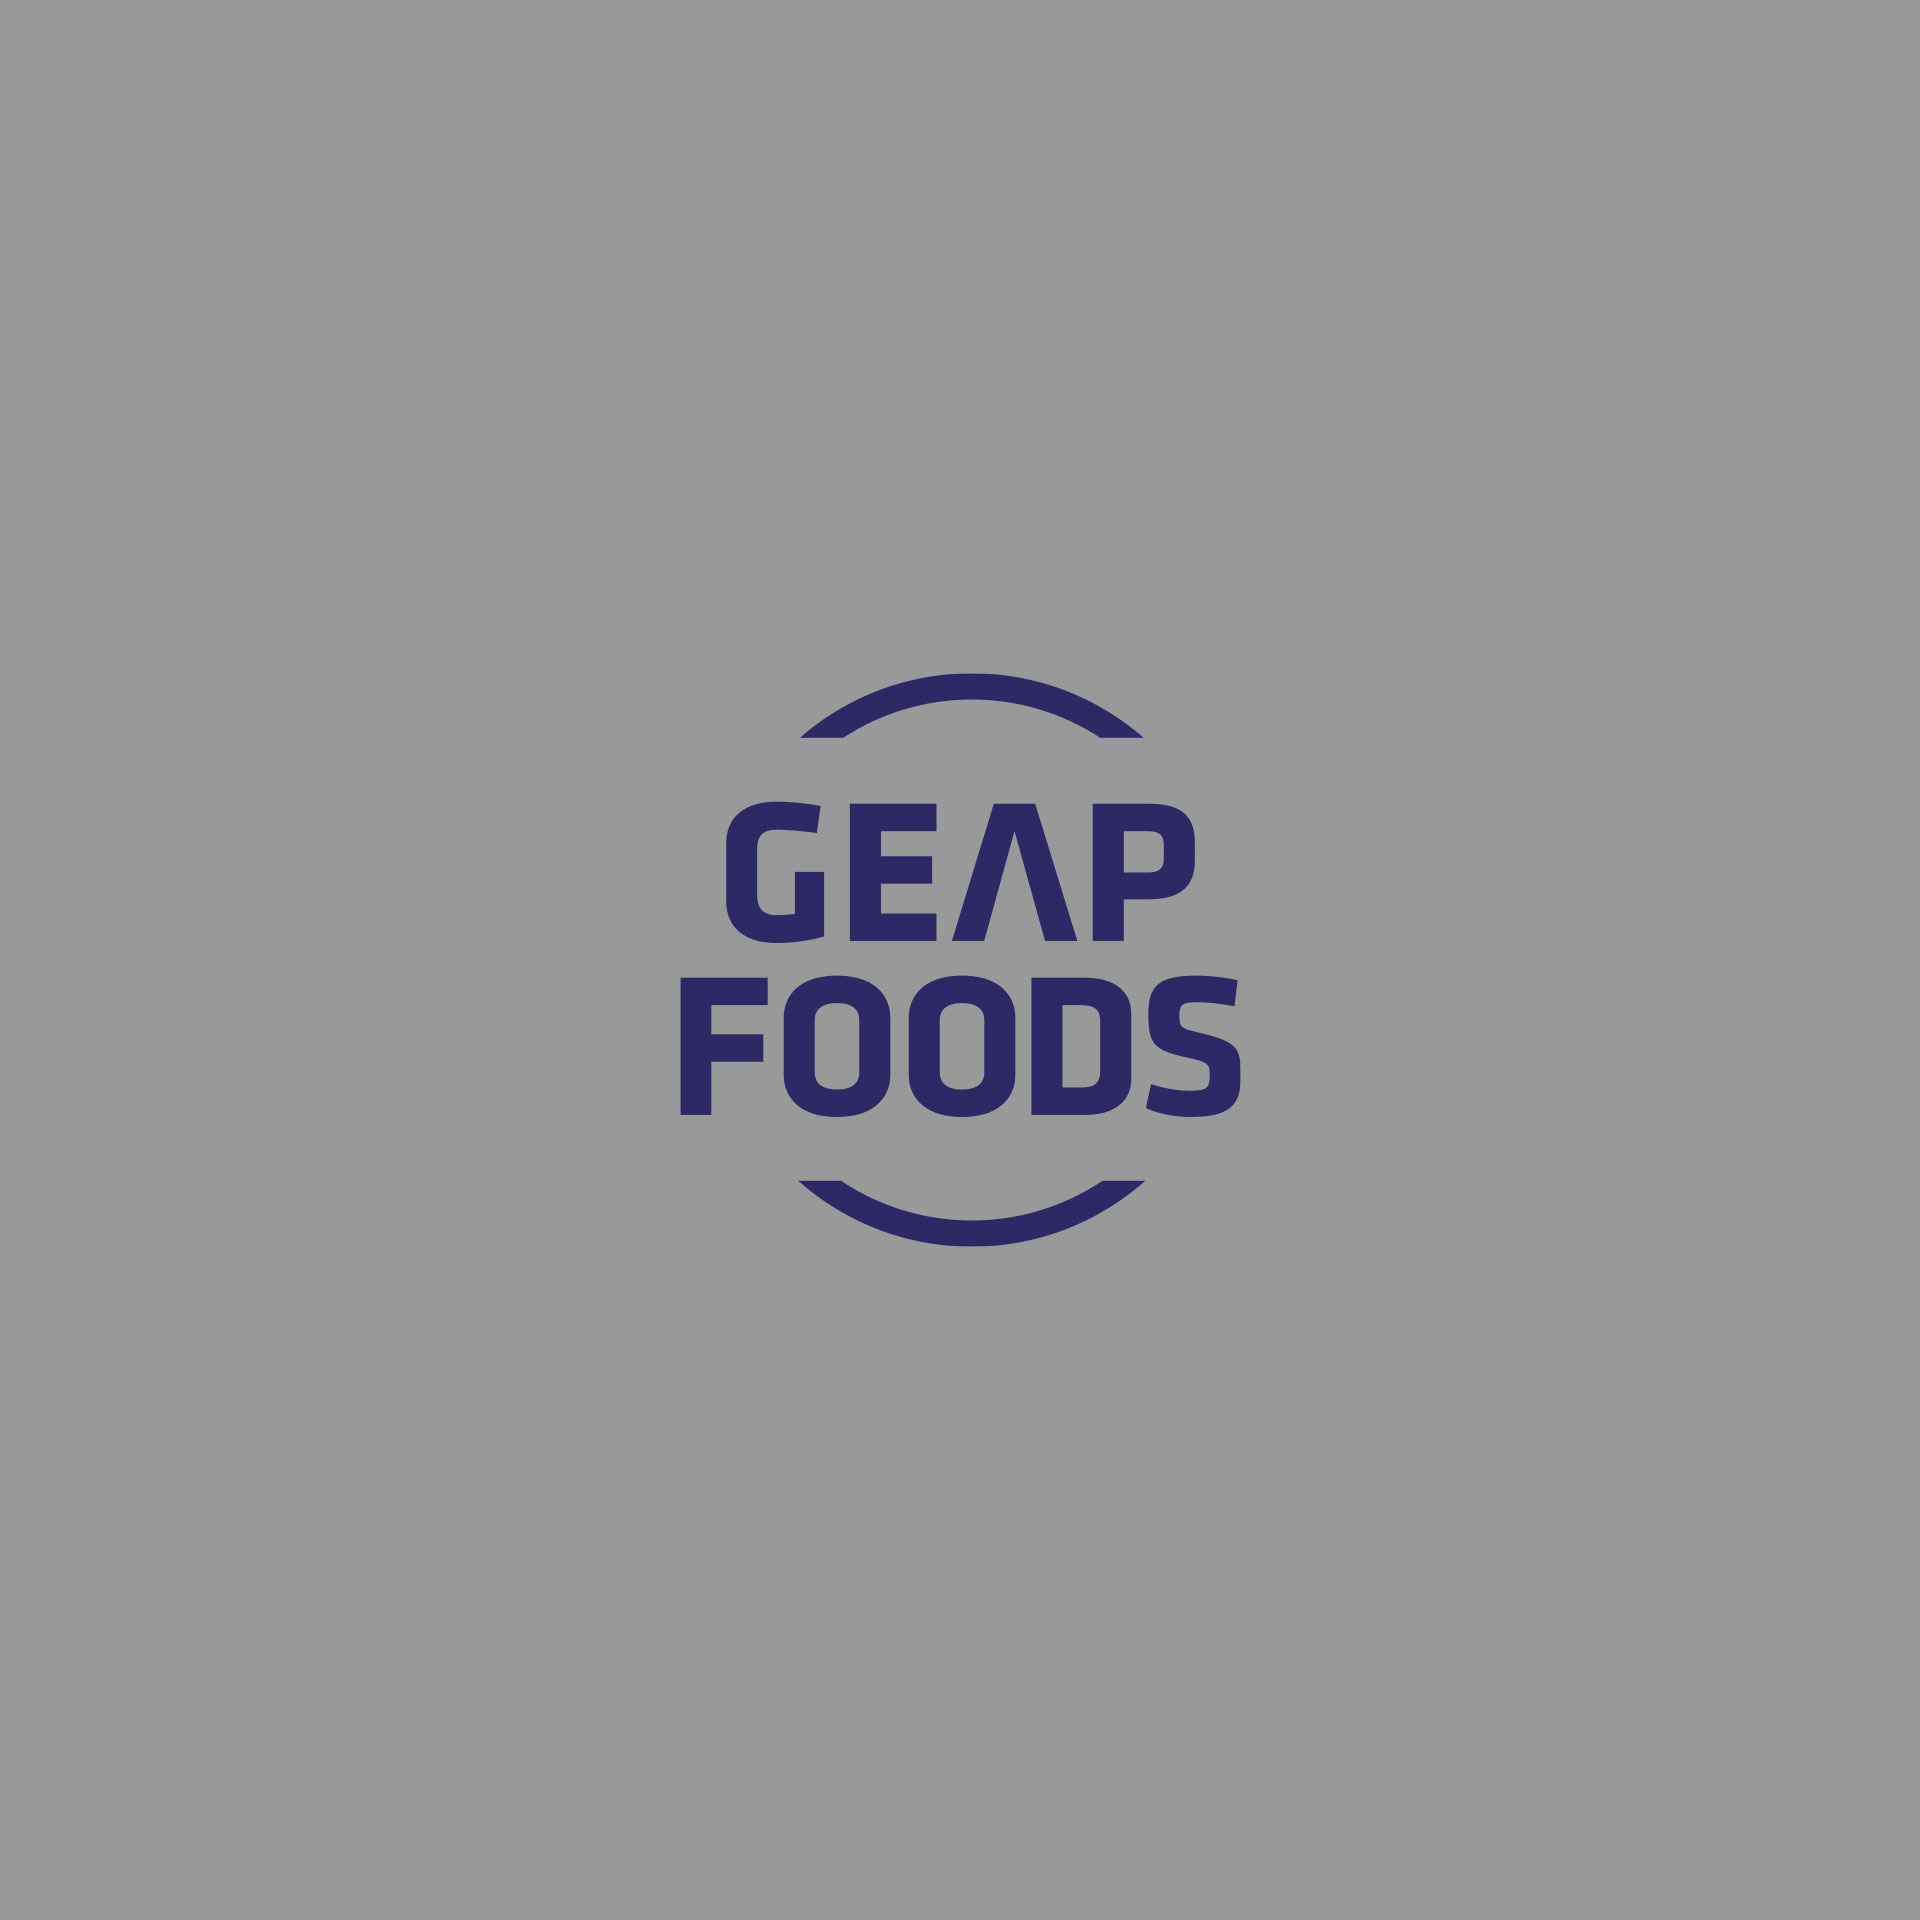 Geap Foods